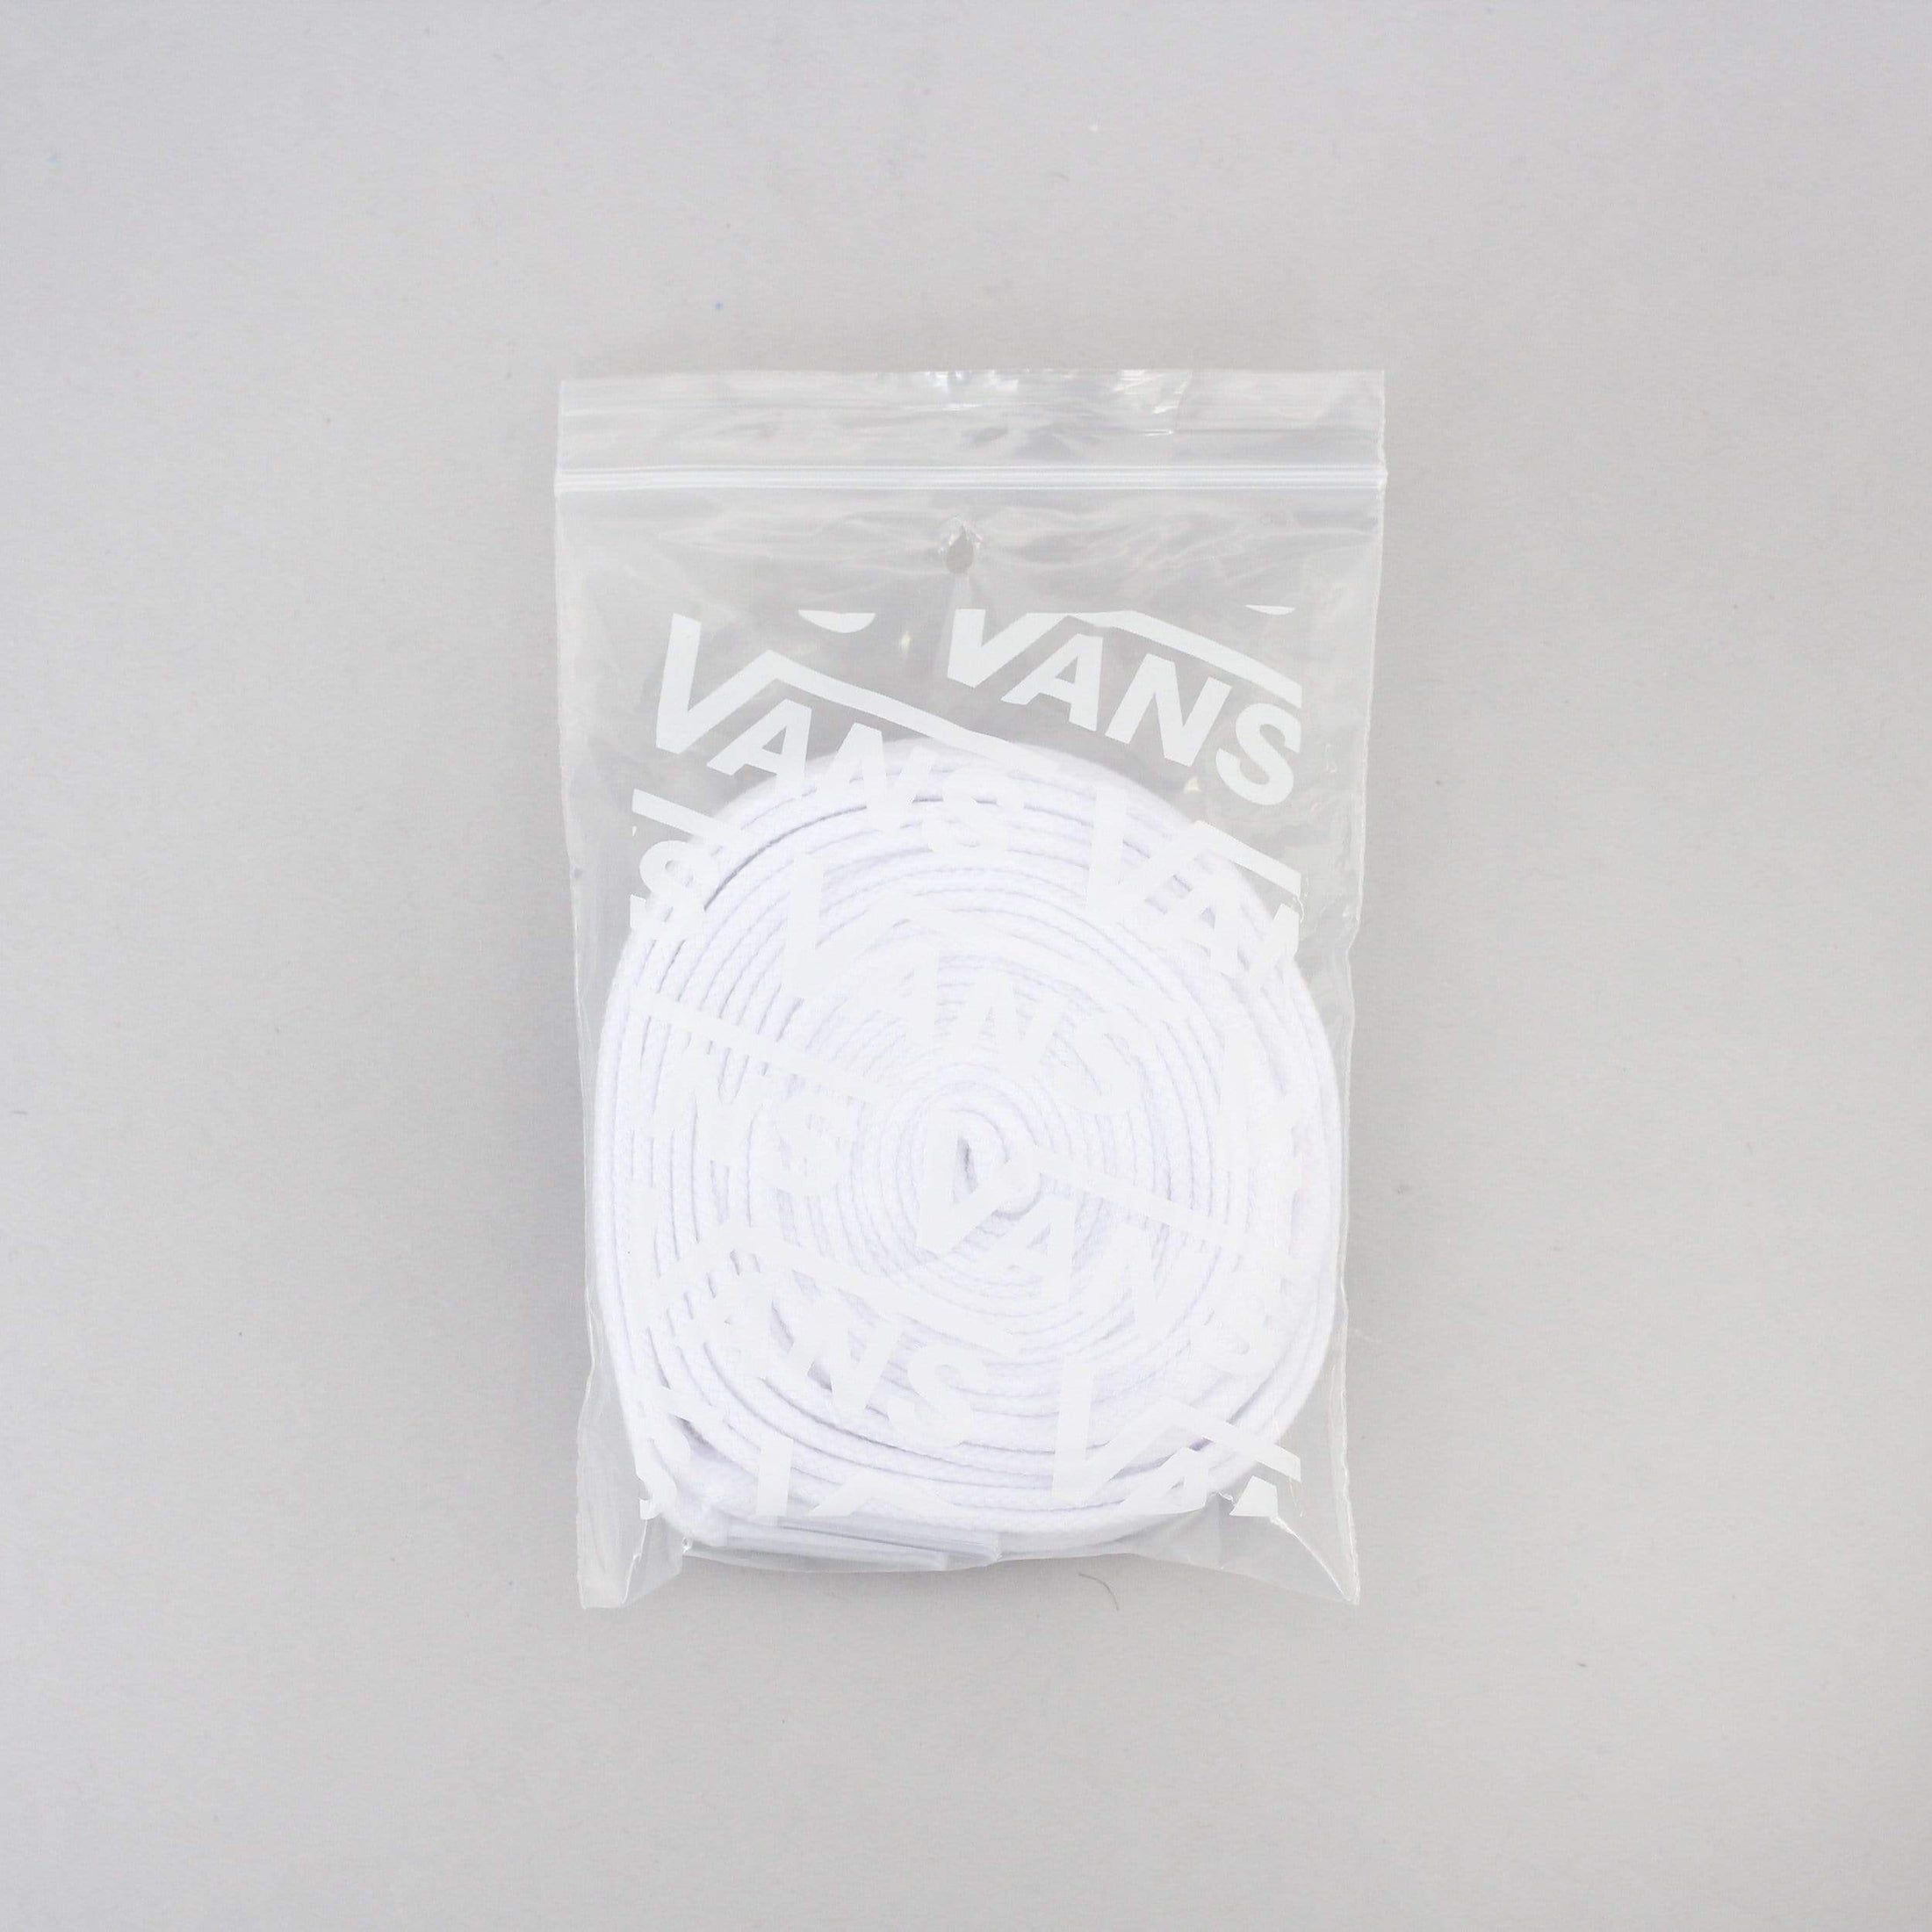 Vans Lampin Pro Ltd Shoes (Quartersnacks) White